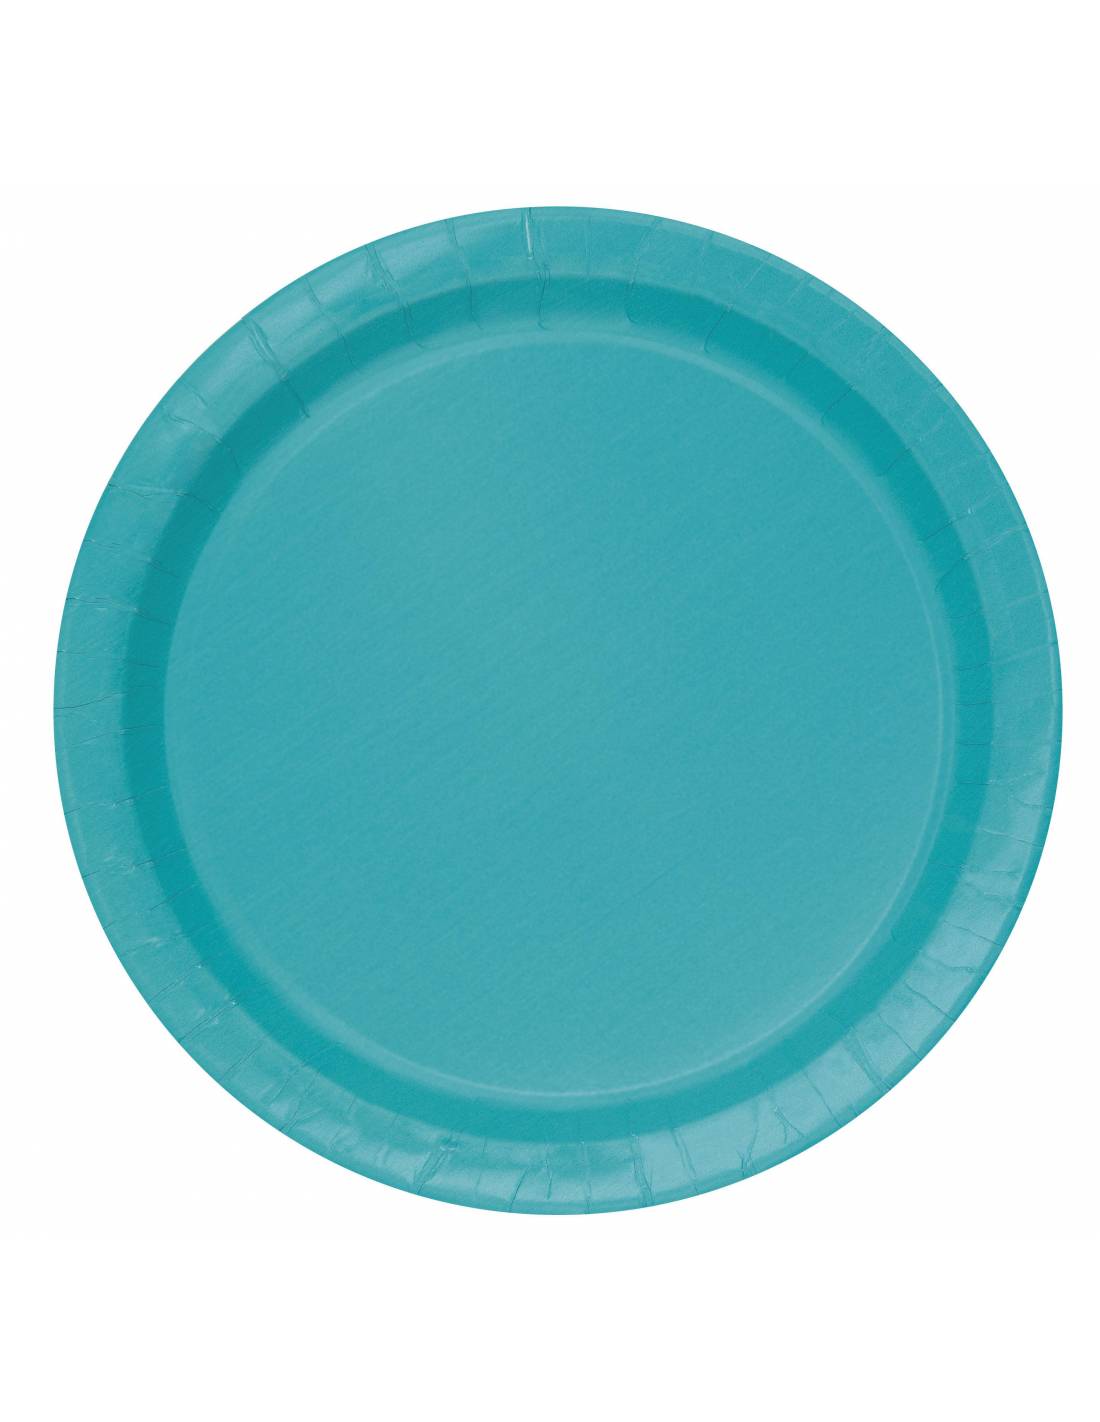 Ec basic turquoise plate